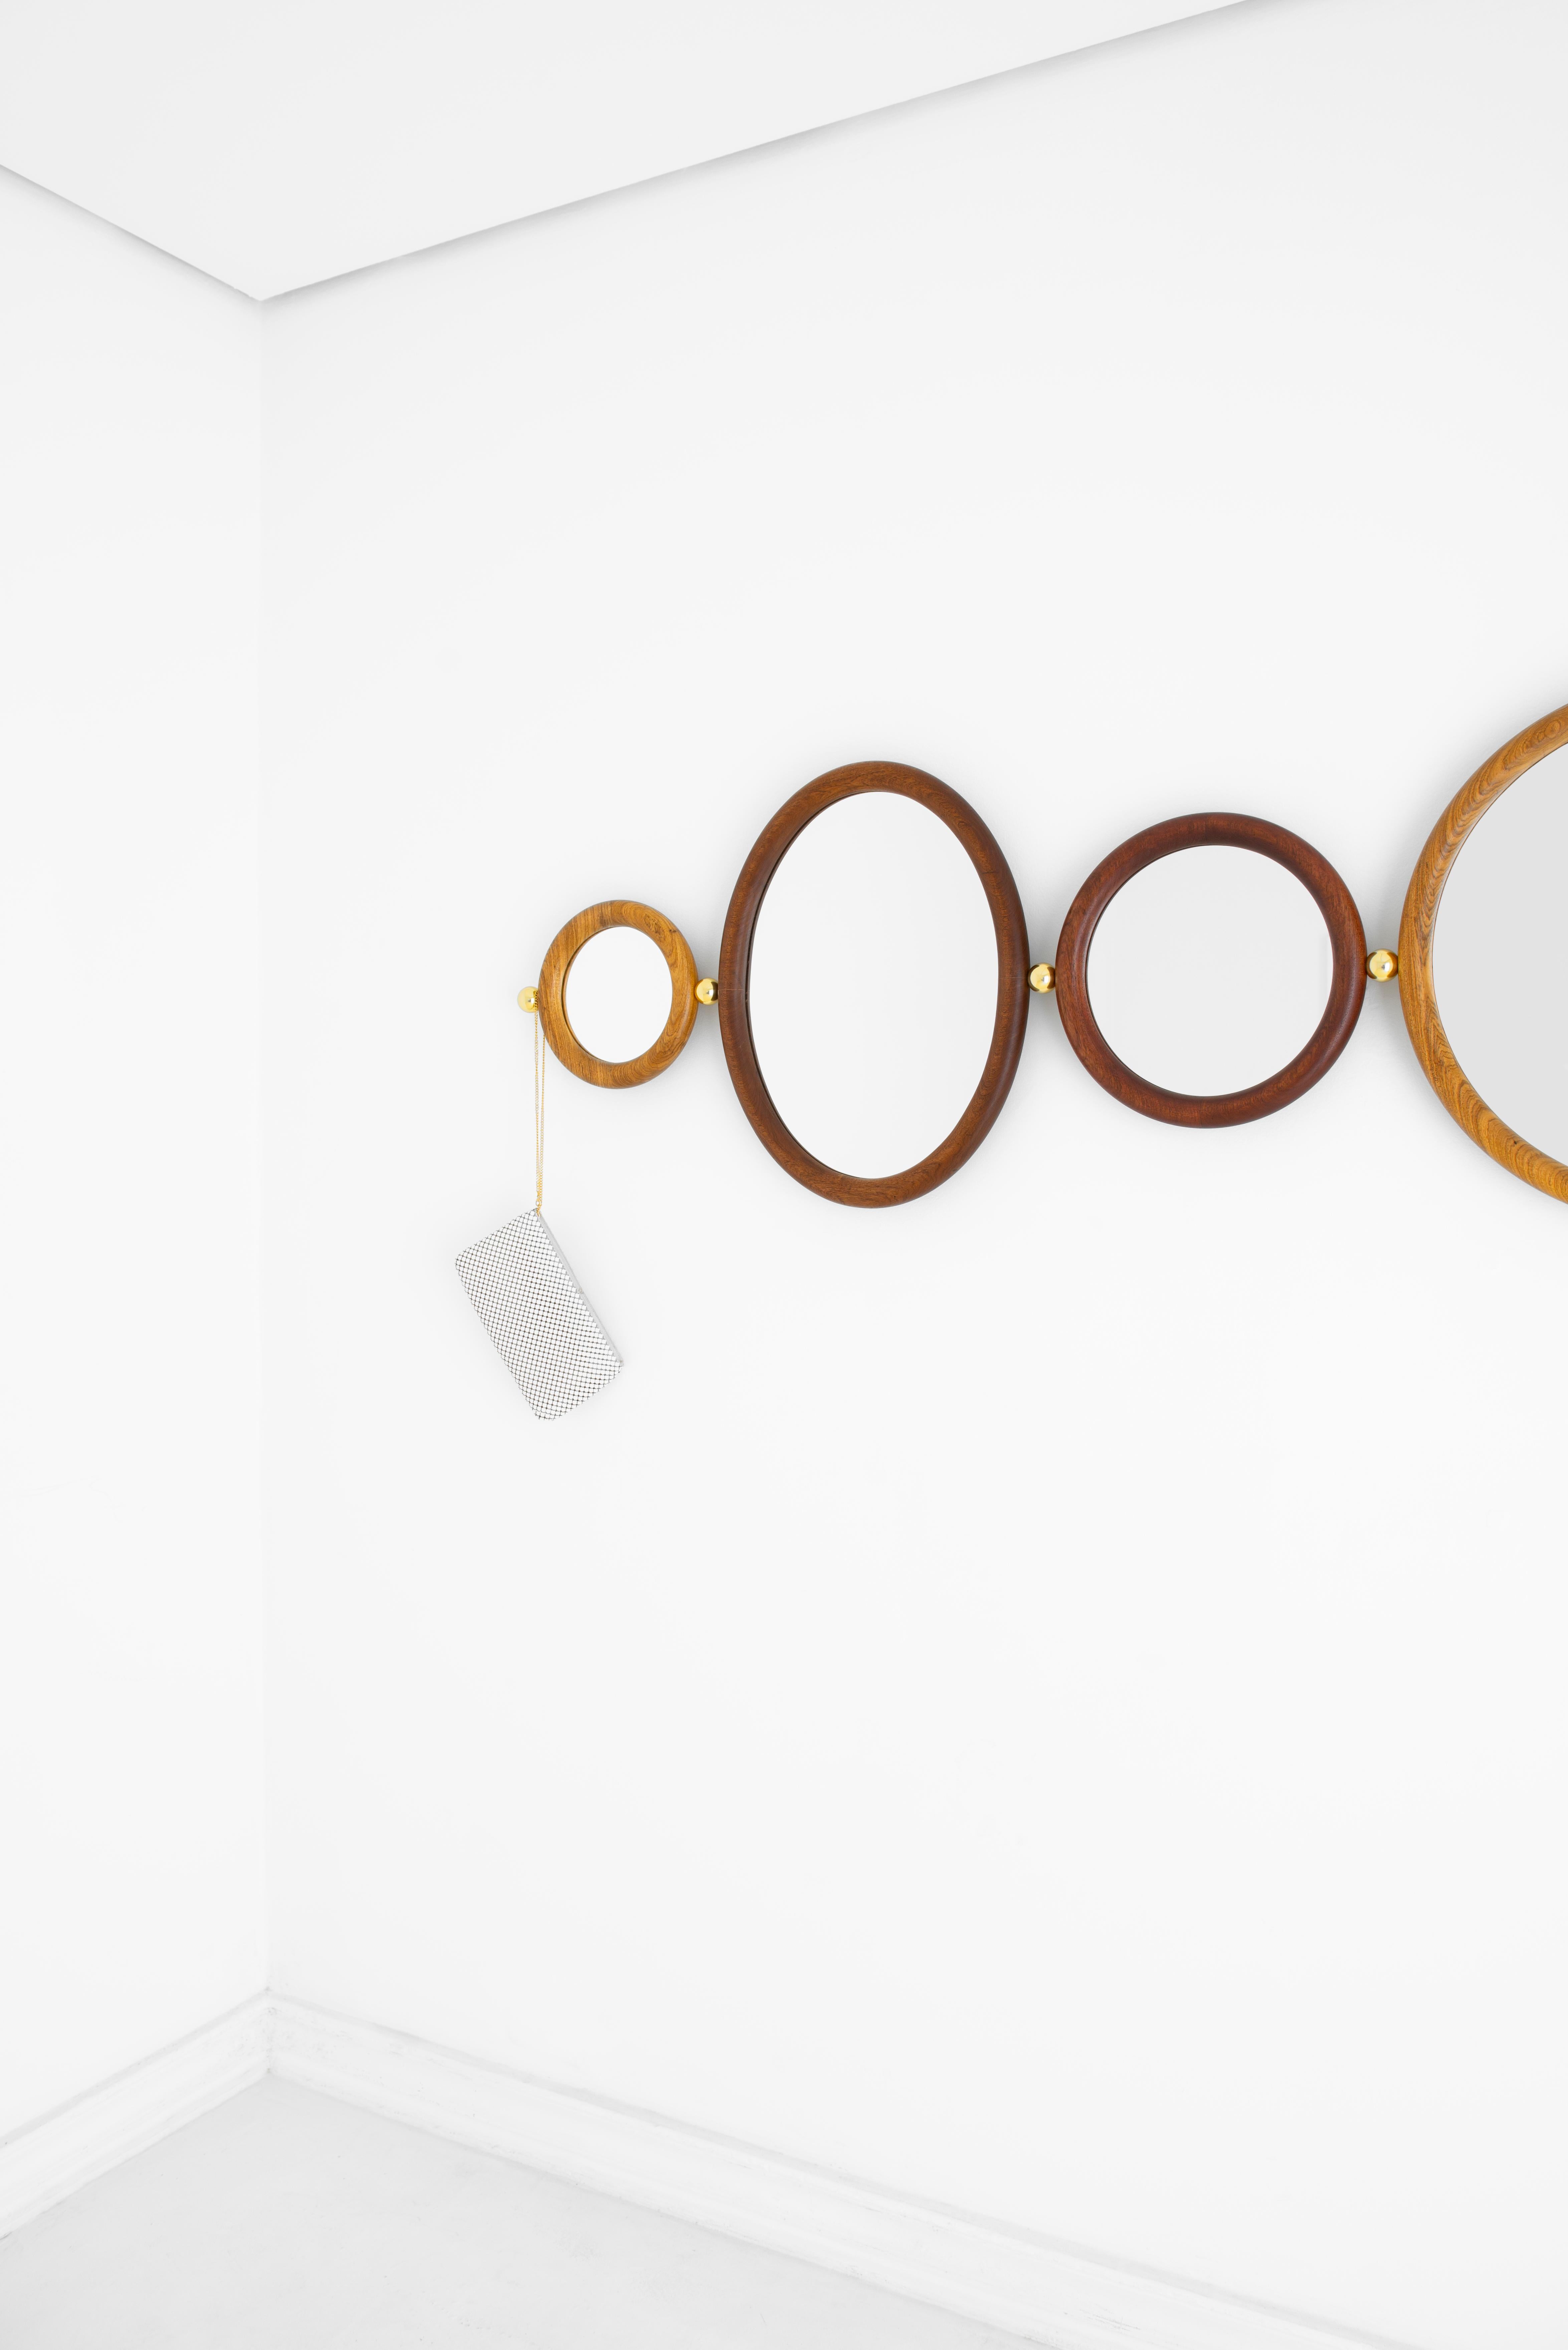 Set of 5 Aro Mirrors, Leandro Garcia, Contemporary Brazil Design 11